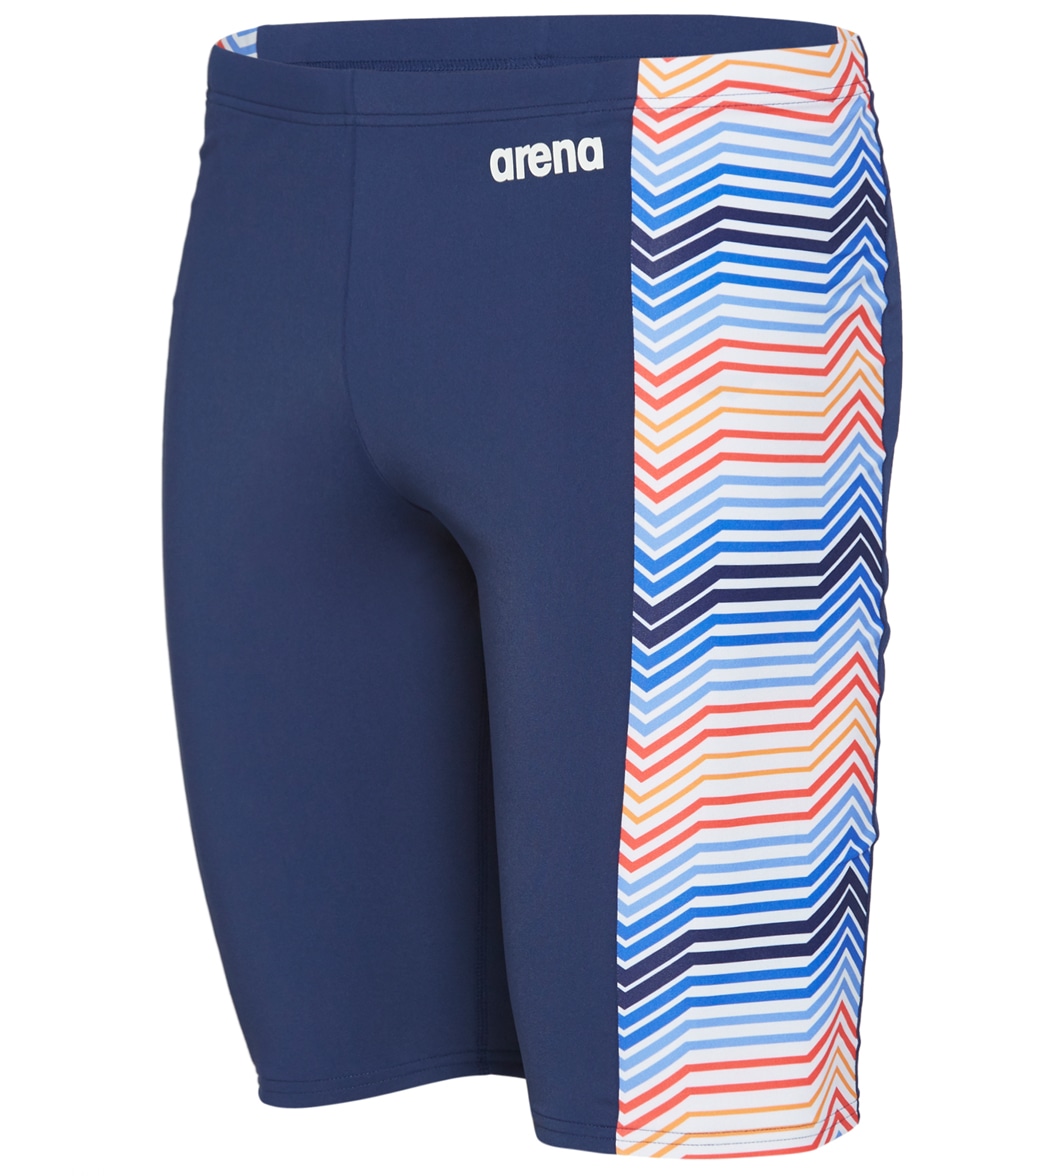 Arena Men's Multicolor Stripes Maxlife Jammer Swimsuit - Navy/Navy/Multi 22 - Swimoutlet.com